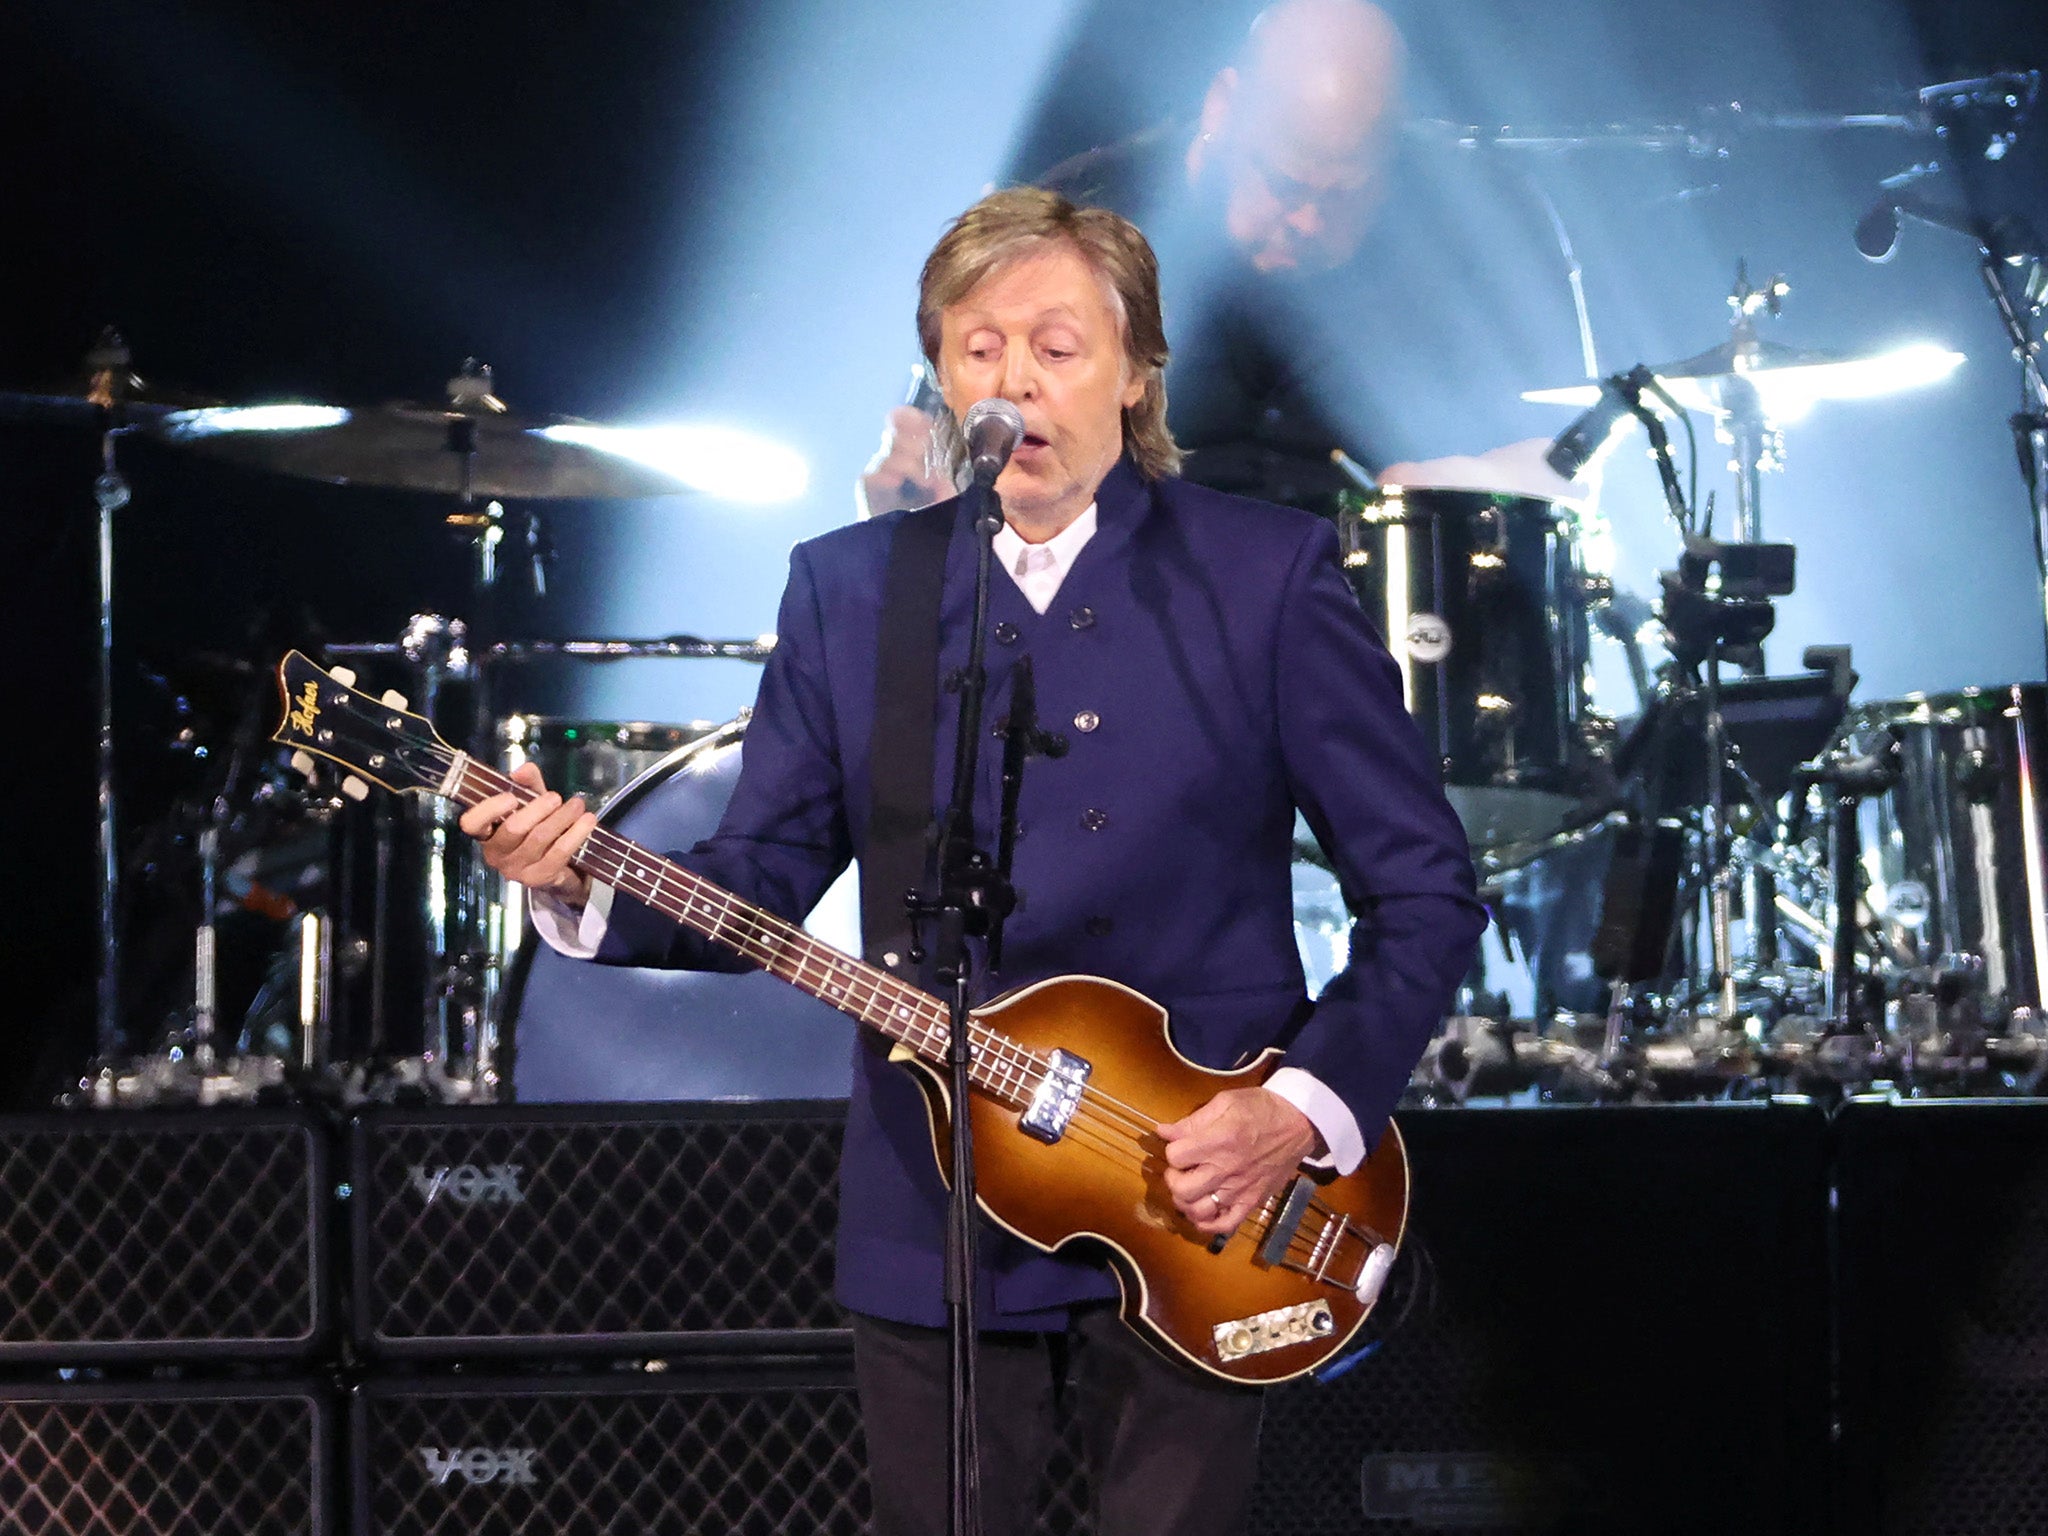 Paul McCartney☆Paul Is Live UK Parlophon - 洋楽